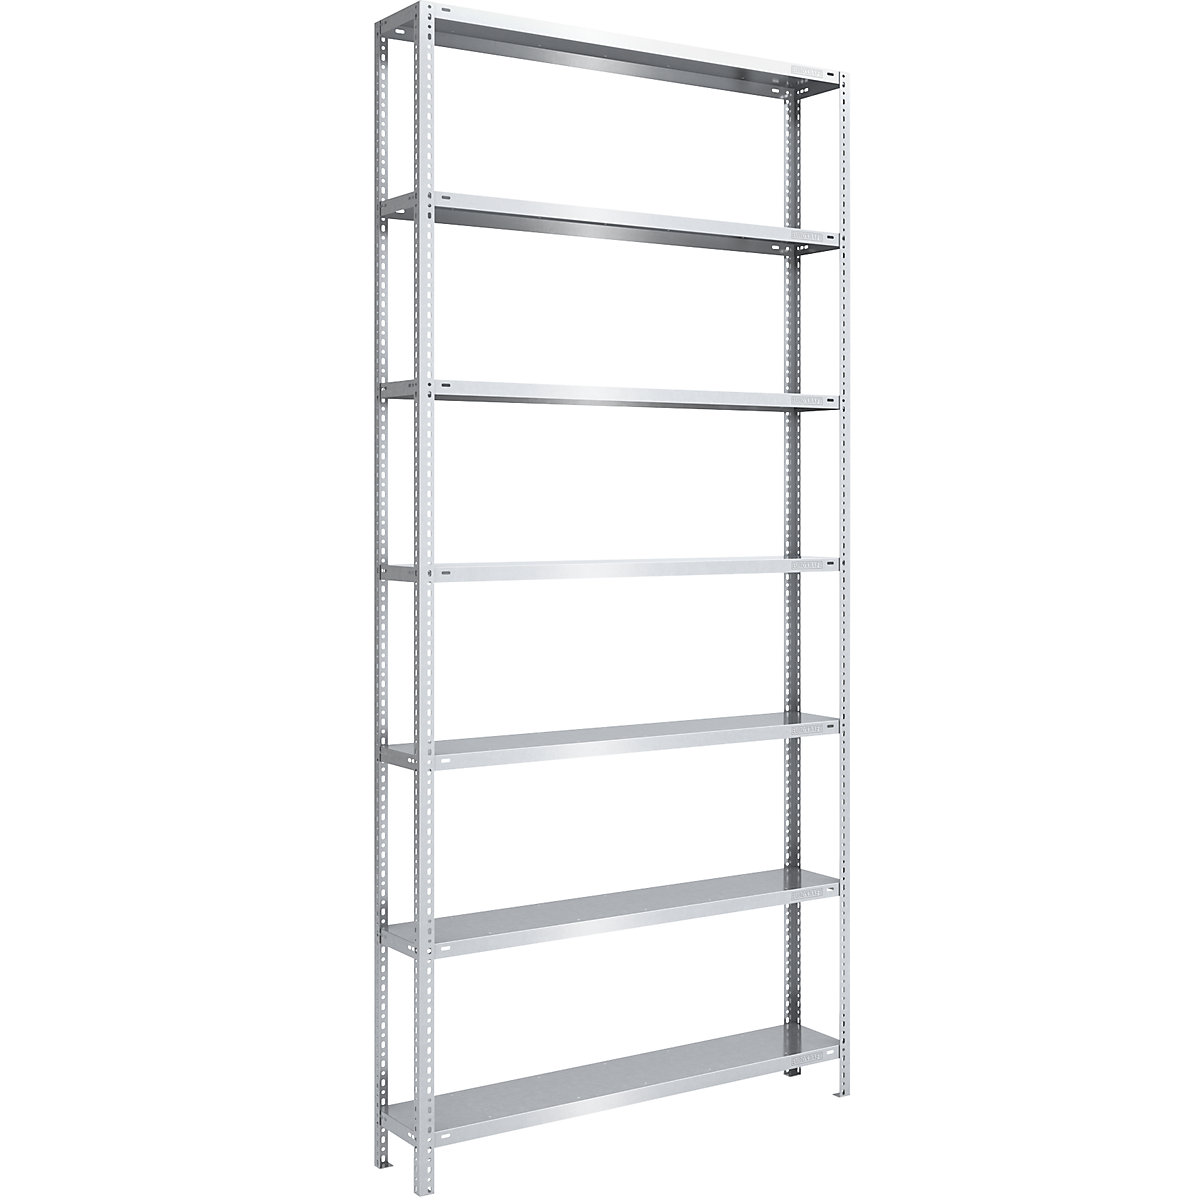 Bolt-together shelf unit, light duty, zinc plated – eurokraft pro, shelf unit height 3000 mm, shelf width 1300 mm, depth 300 mm, standard shelf unit-9